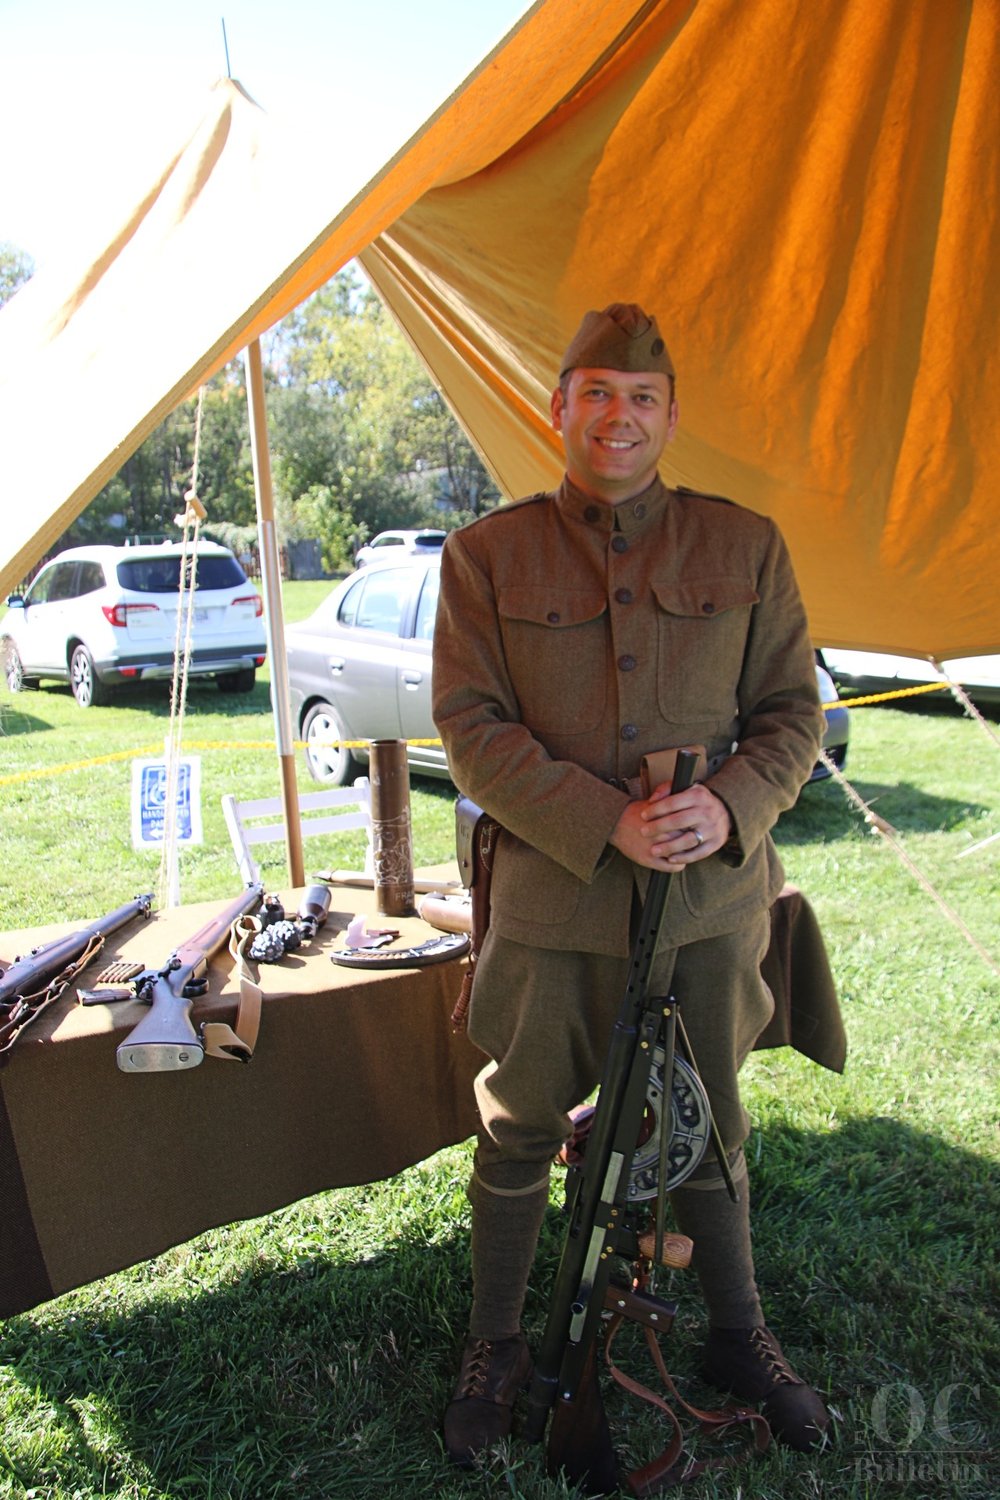  Jonathon Krisko of the Central Virginia Timeline Association provided education on World War I era history and equipment during the festival. (Photo Credit: Andra Landi) 